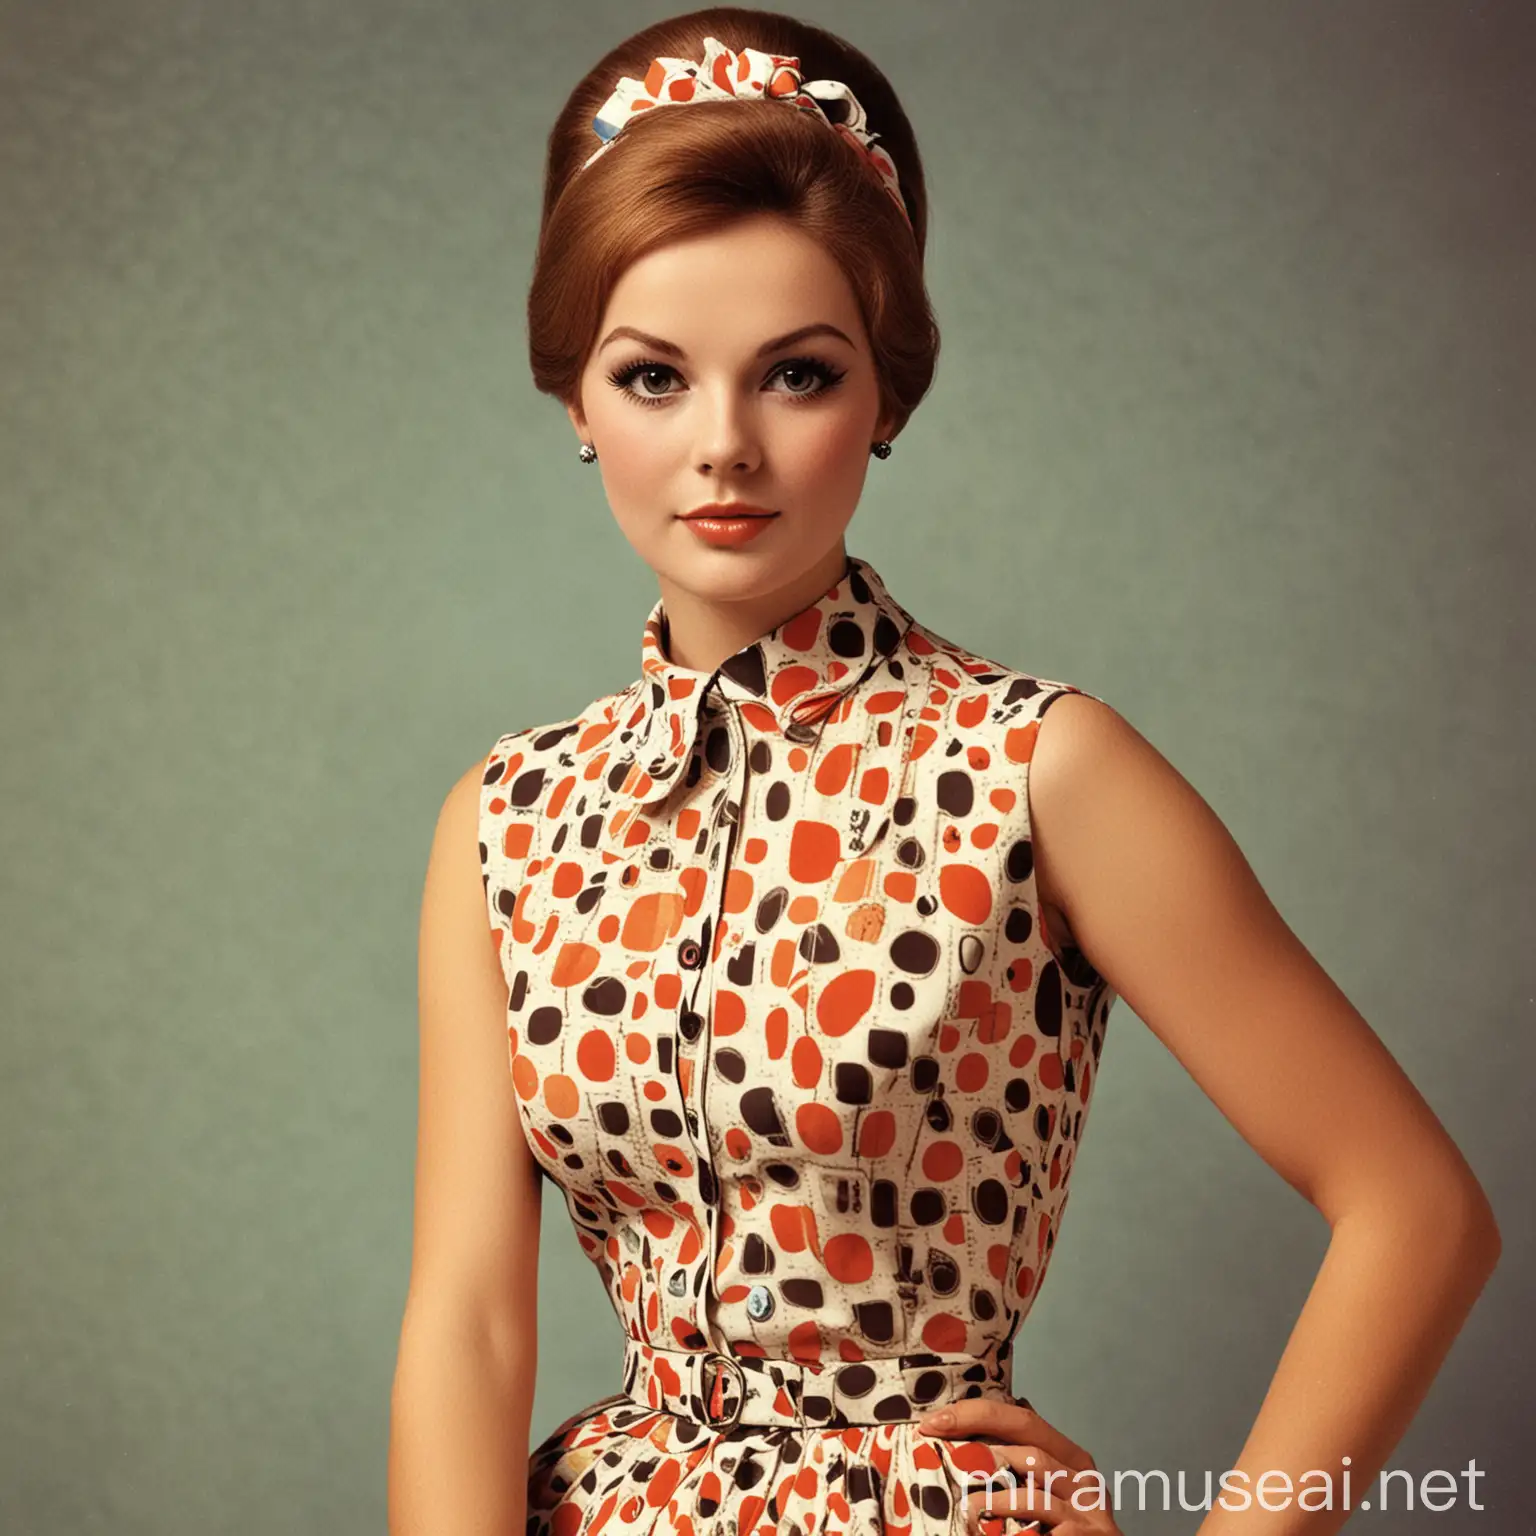 Vintage Lady Fashion 1960s Style Magazine Portrait